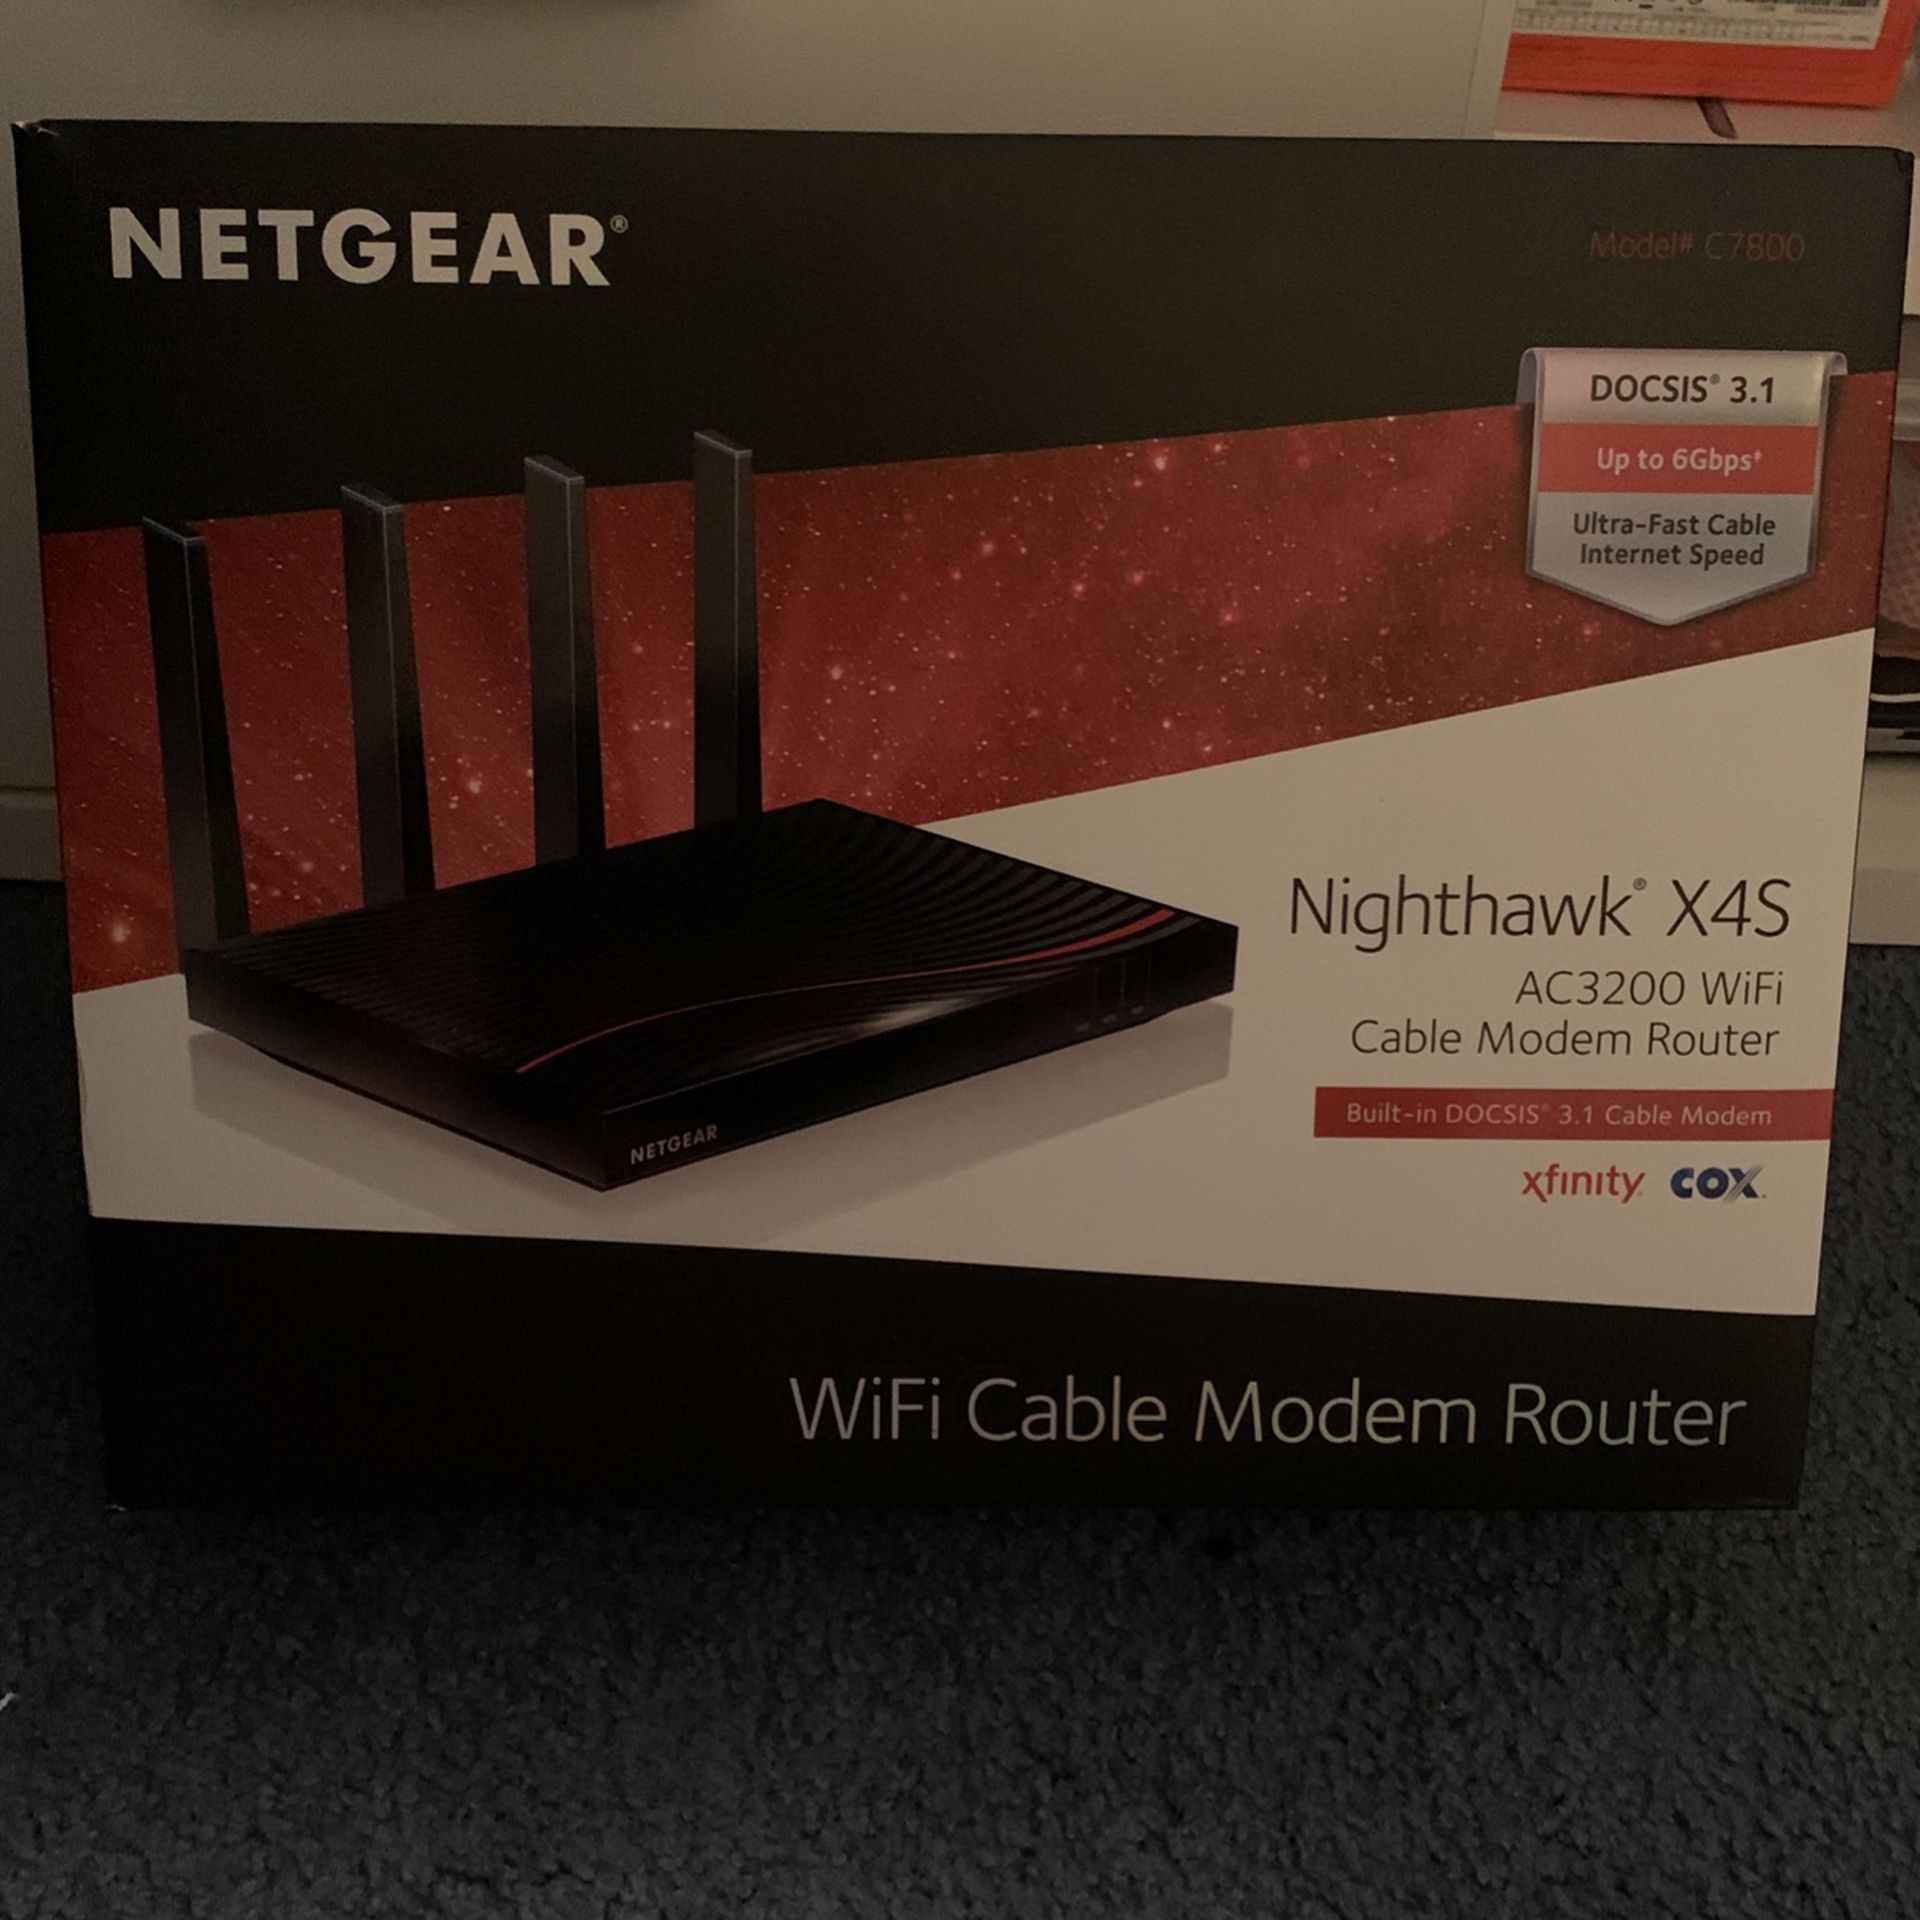 Netgear Nighthawk X4S AC3200 Wifi Cable Router